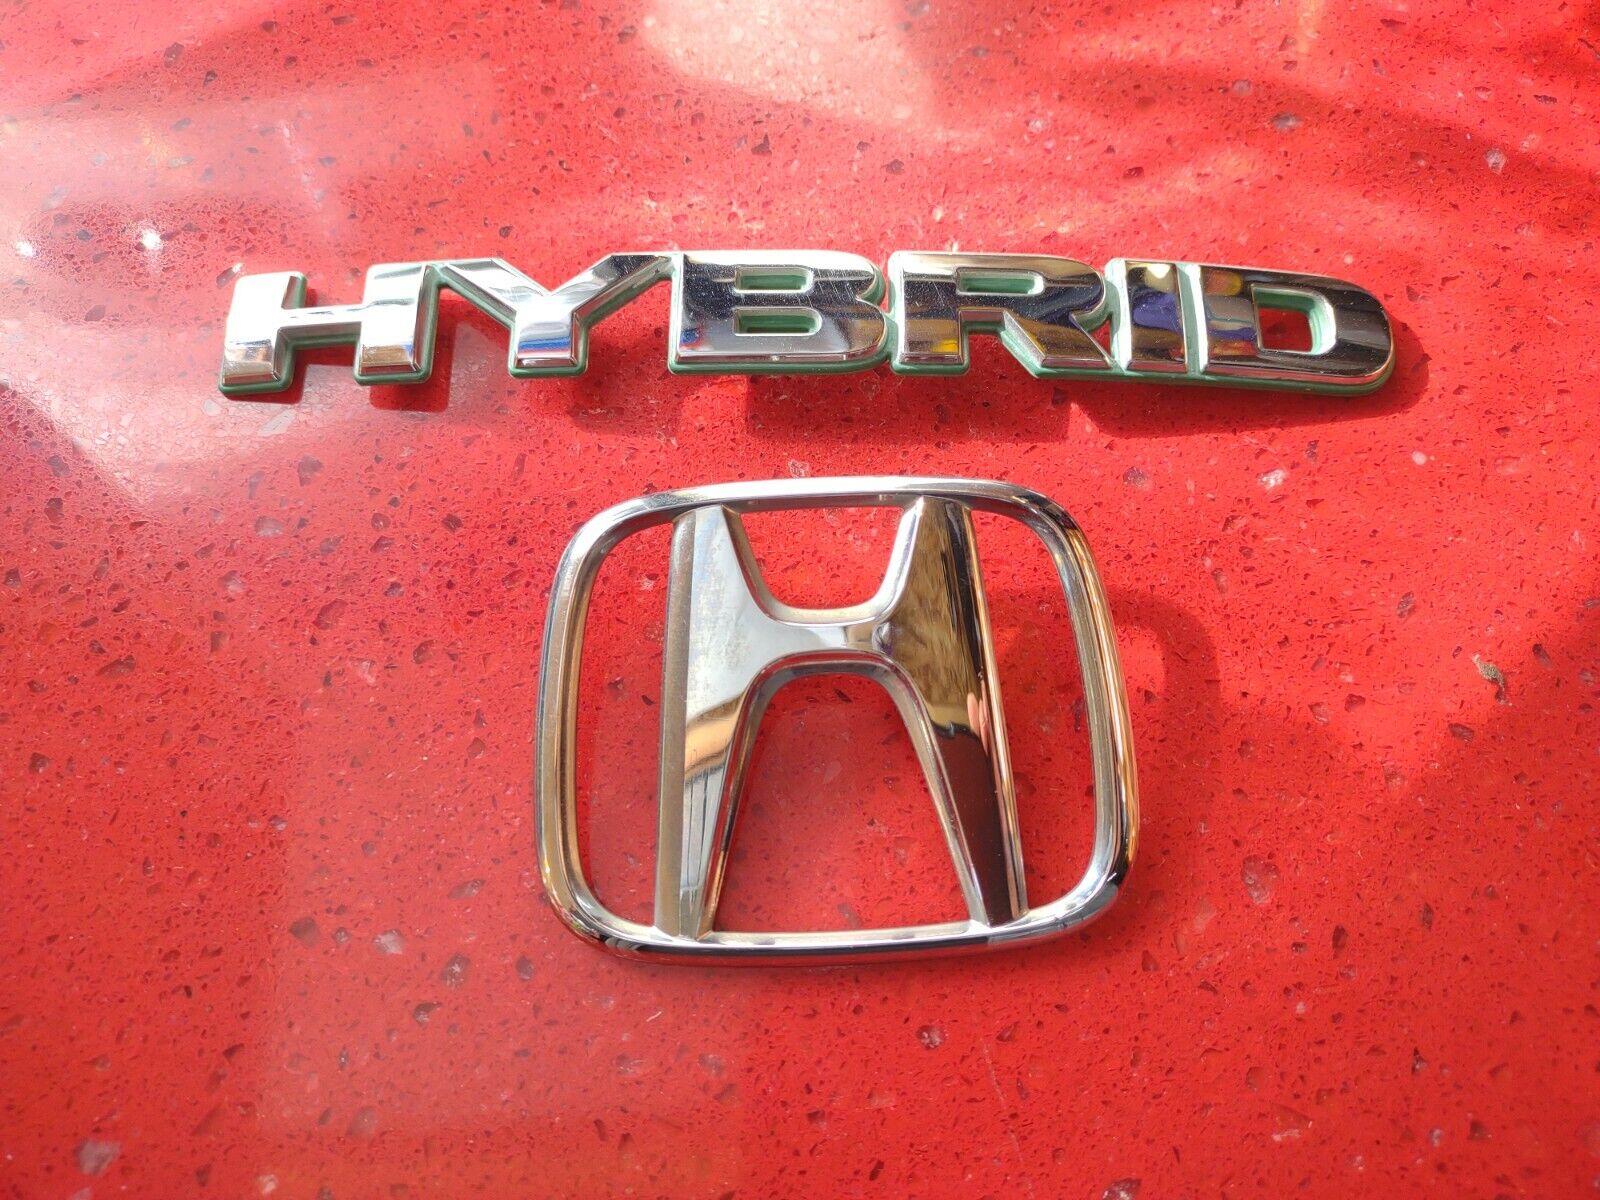 reference arrival morale 03 04 05 Honda Civic—"Hybrid" Rear Nameplate Emblem LOGO insignia | eBay